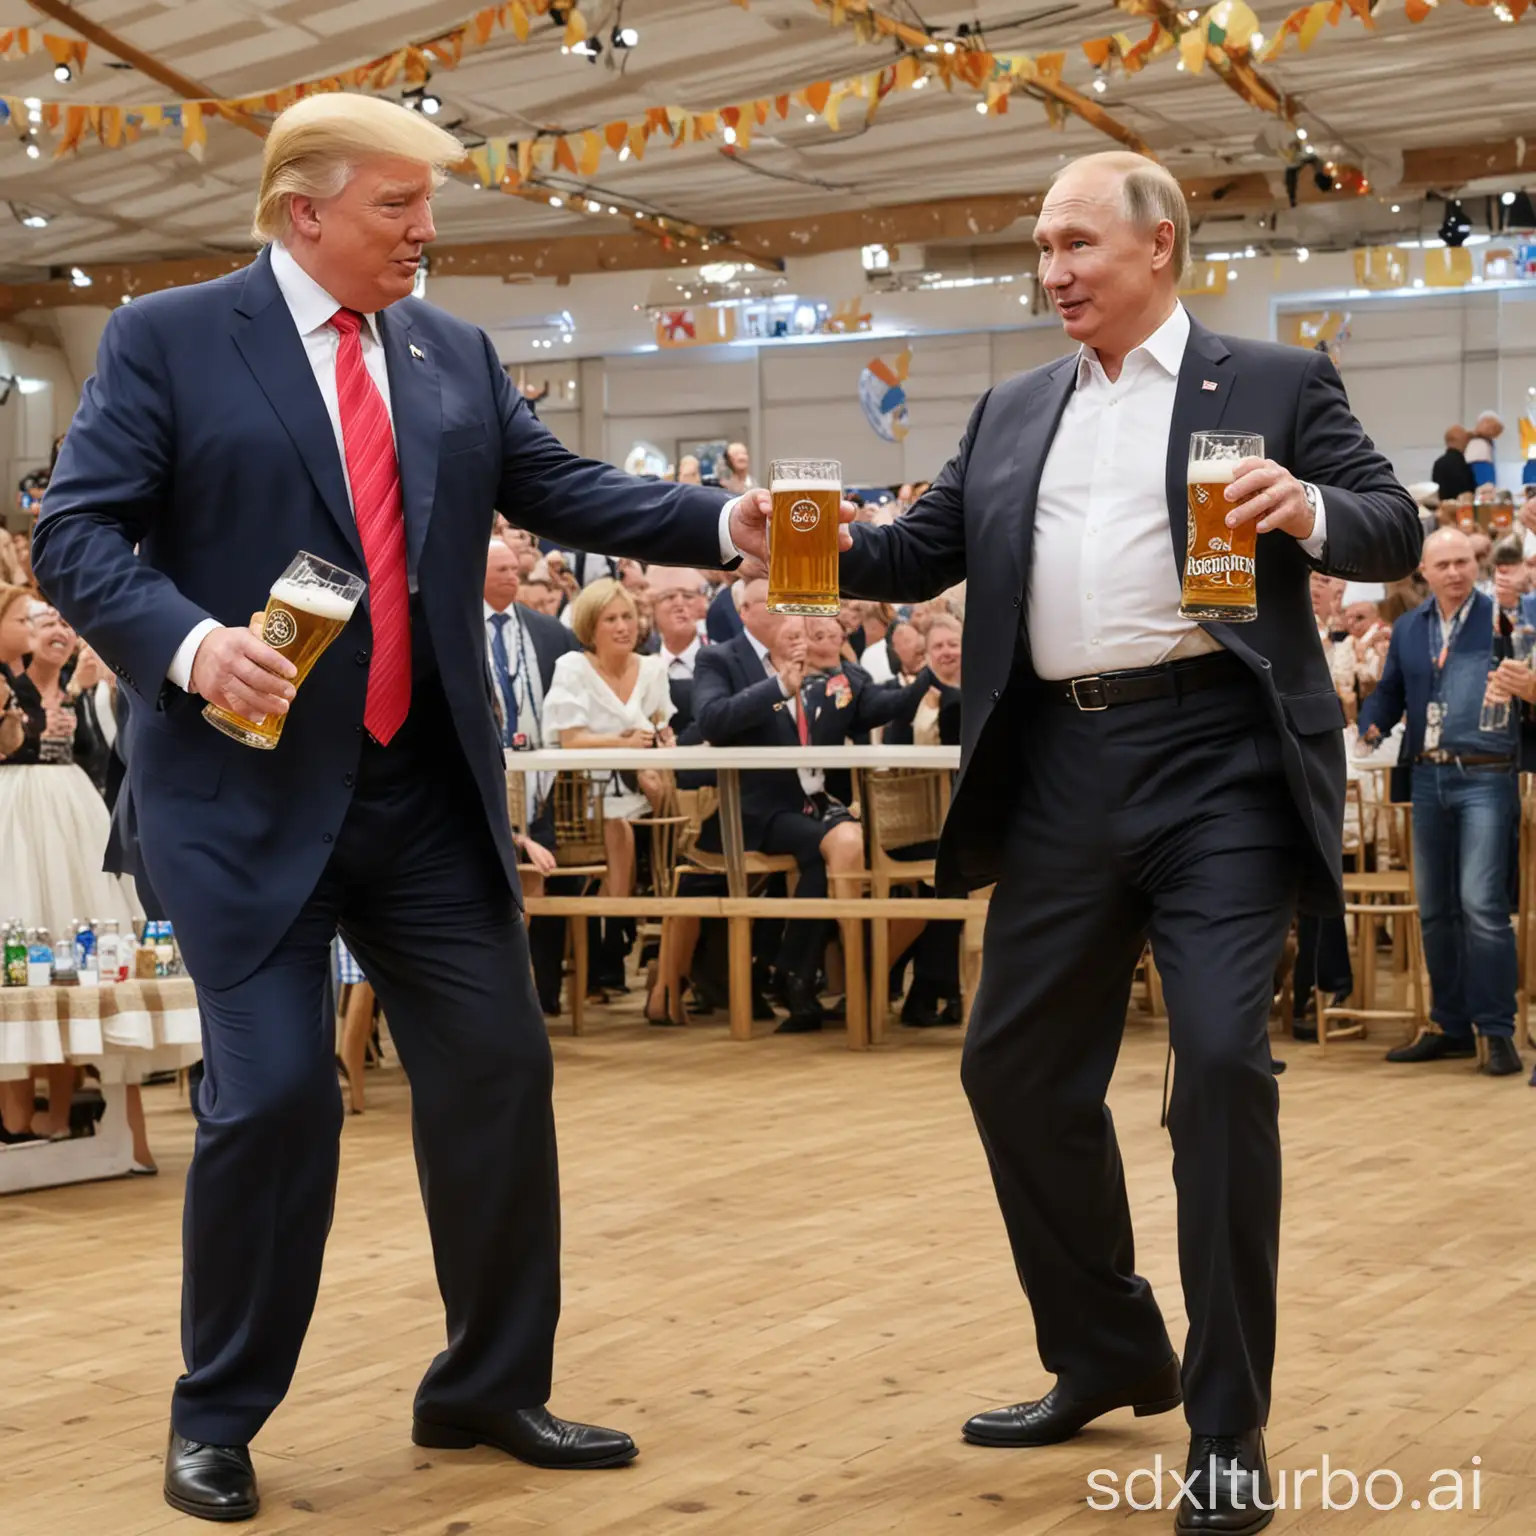 Donald-Trump-and-Vladimir-Putin-Dancing-with-Beer-at-Munich-Oktoberfest